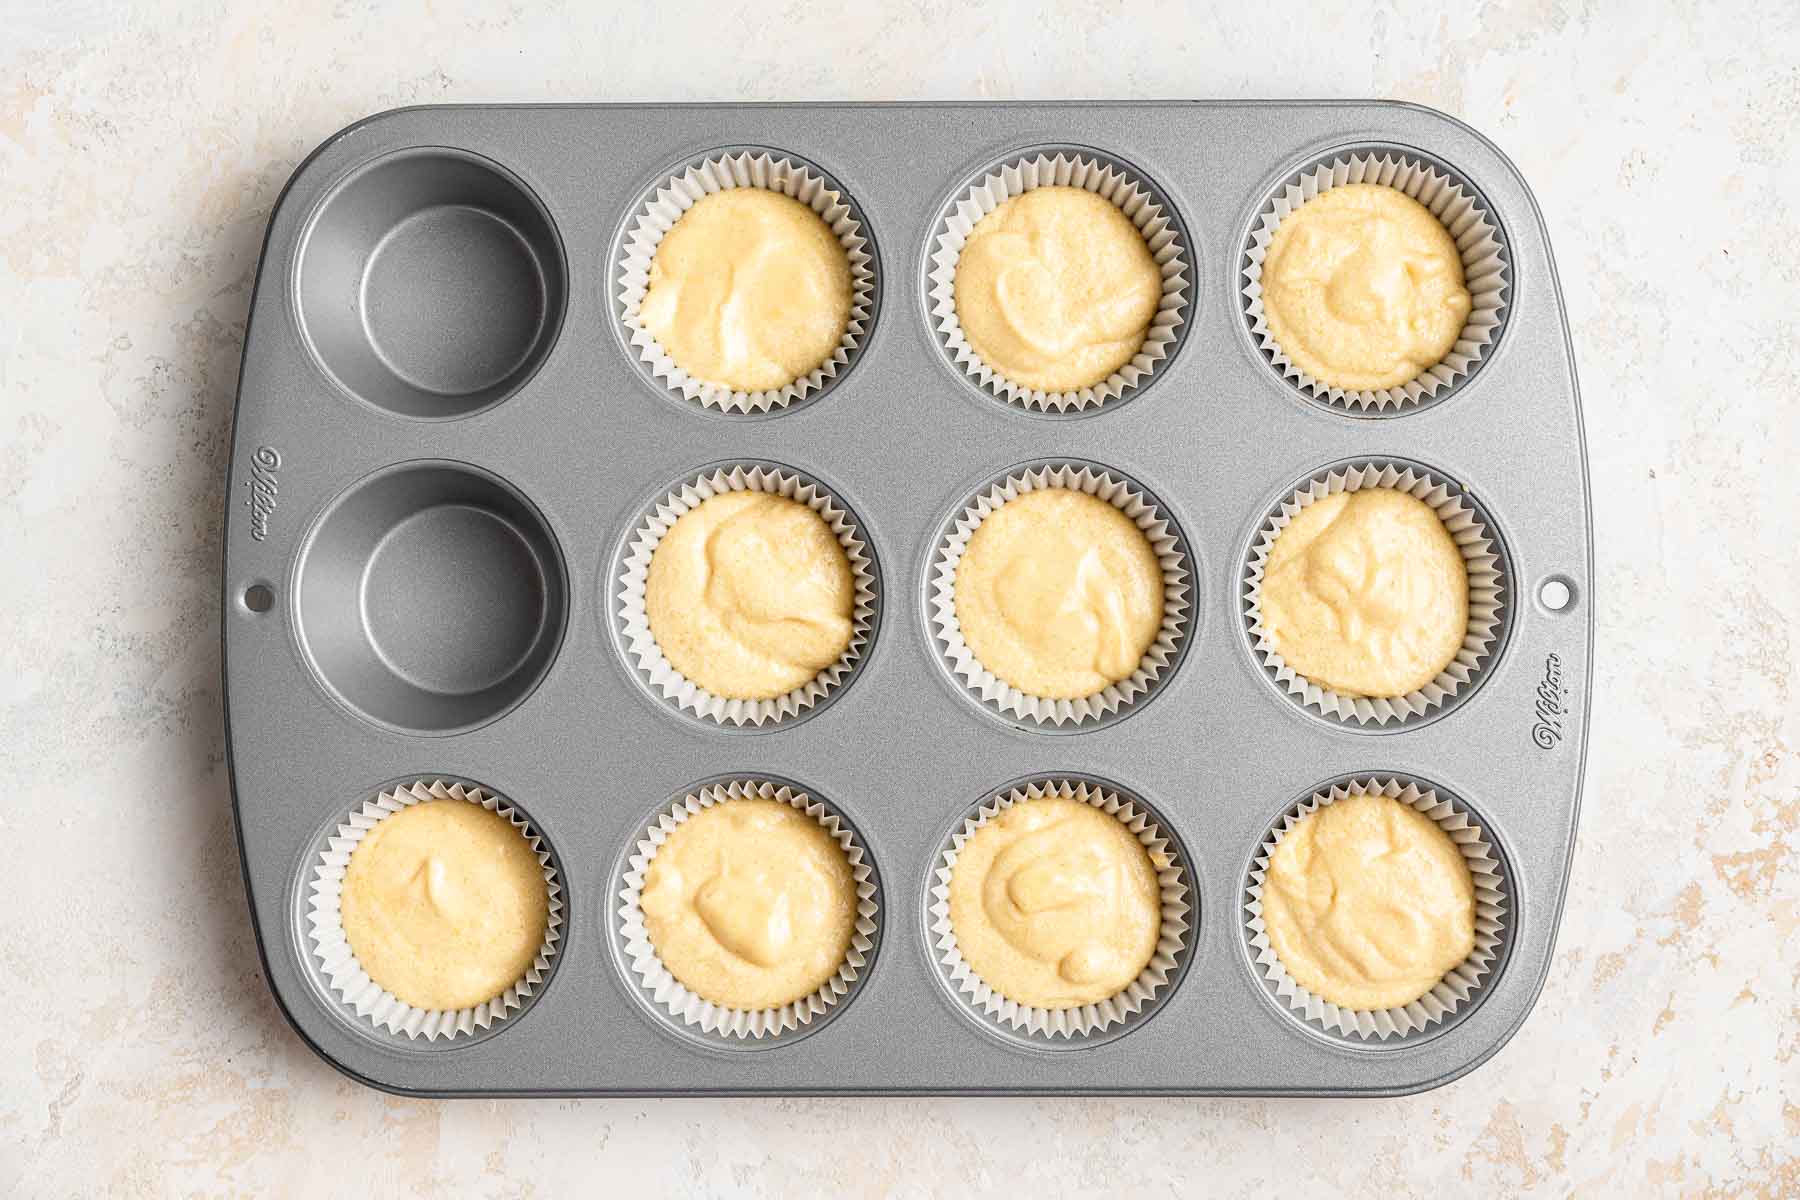 Ten cupcakes in a baking pan, raw.